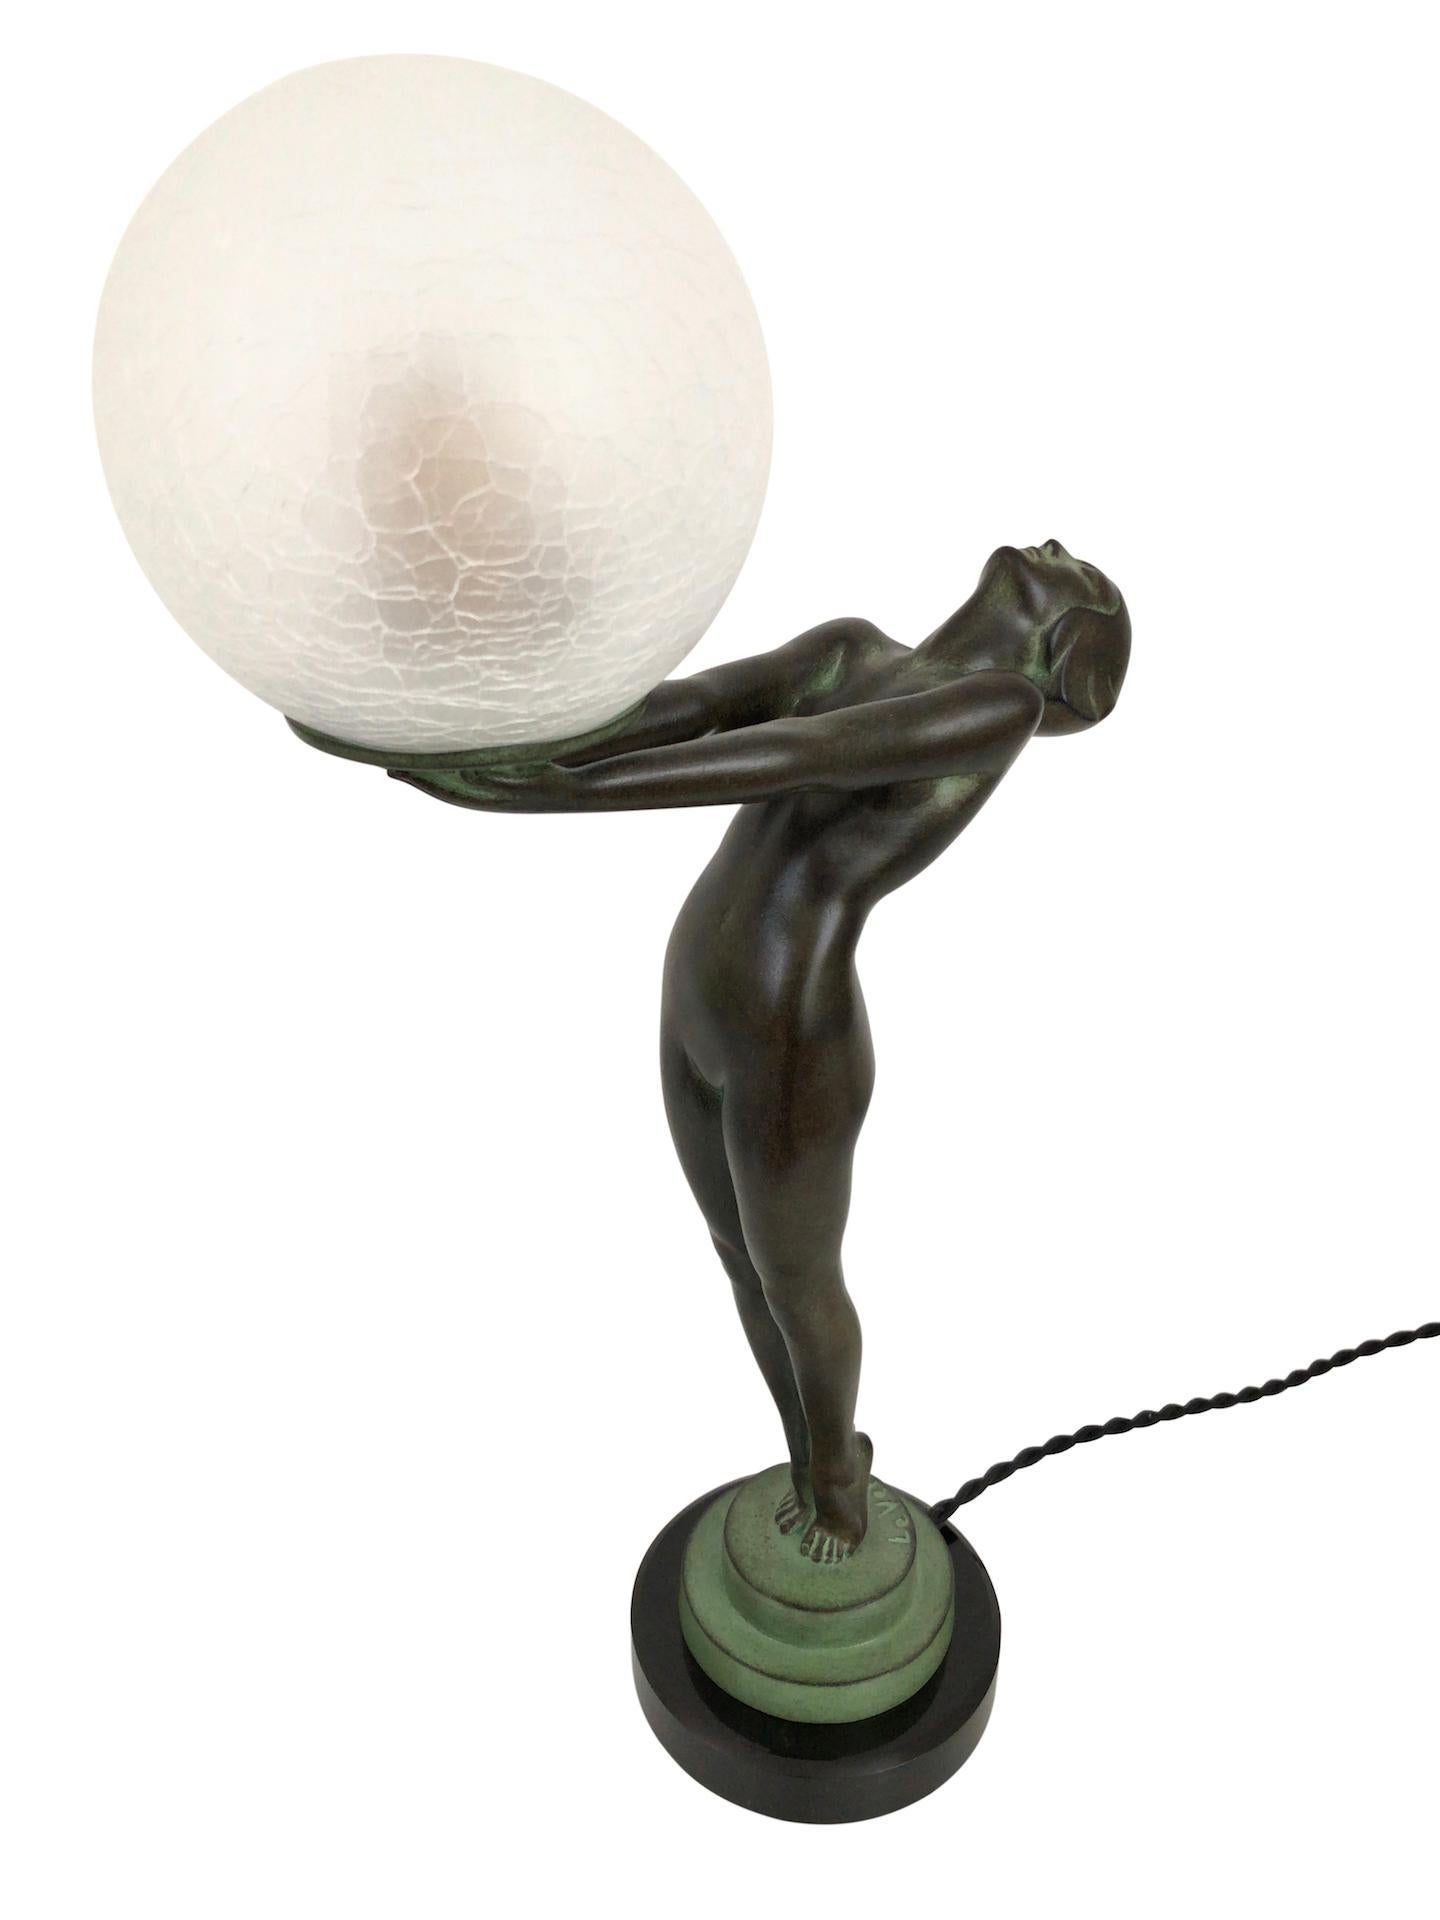 French Clarté Sculpture Lueur Lamp from the Important Art Deco Artist Max Le Verrier